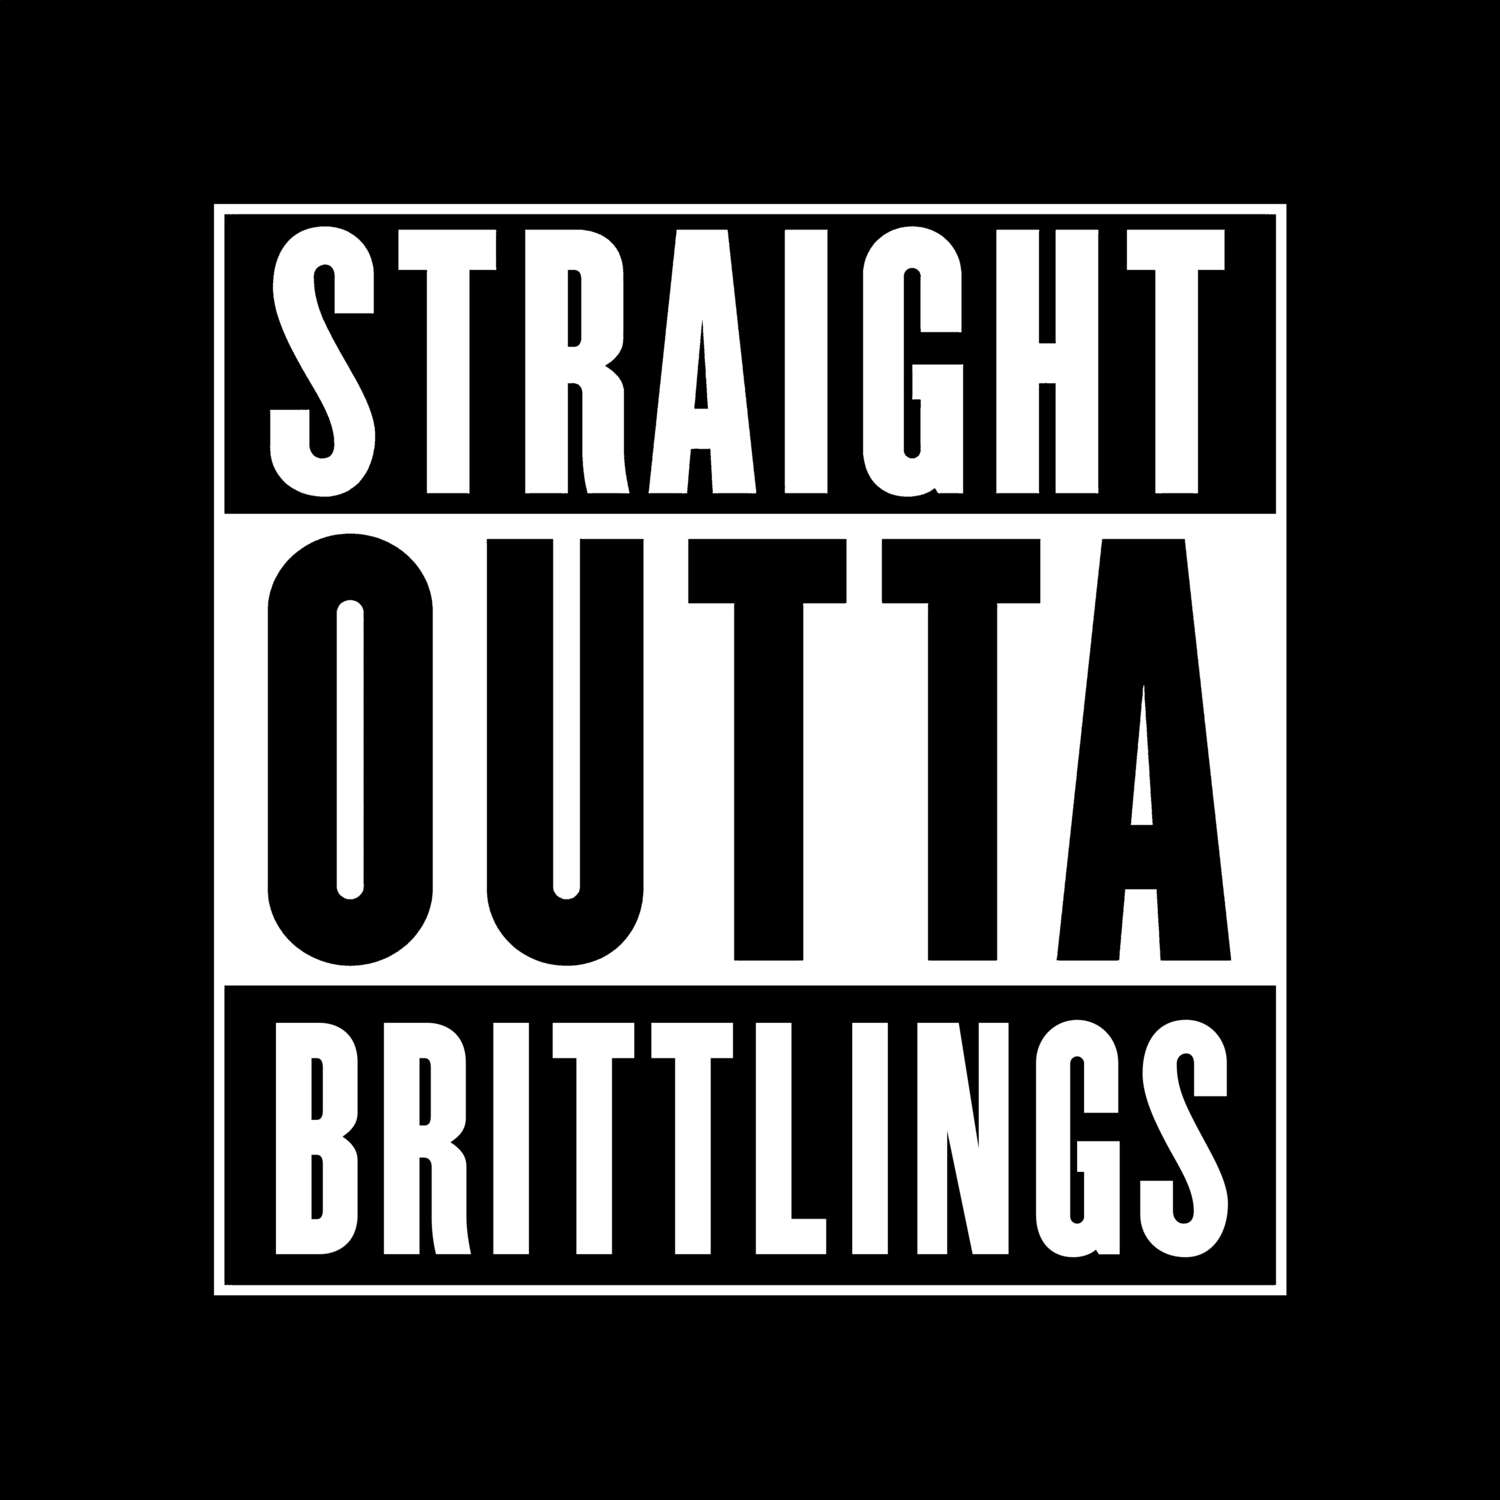 Brittlings T-Shirt »Straight Outta«